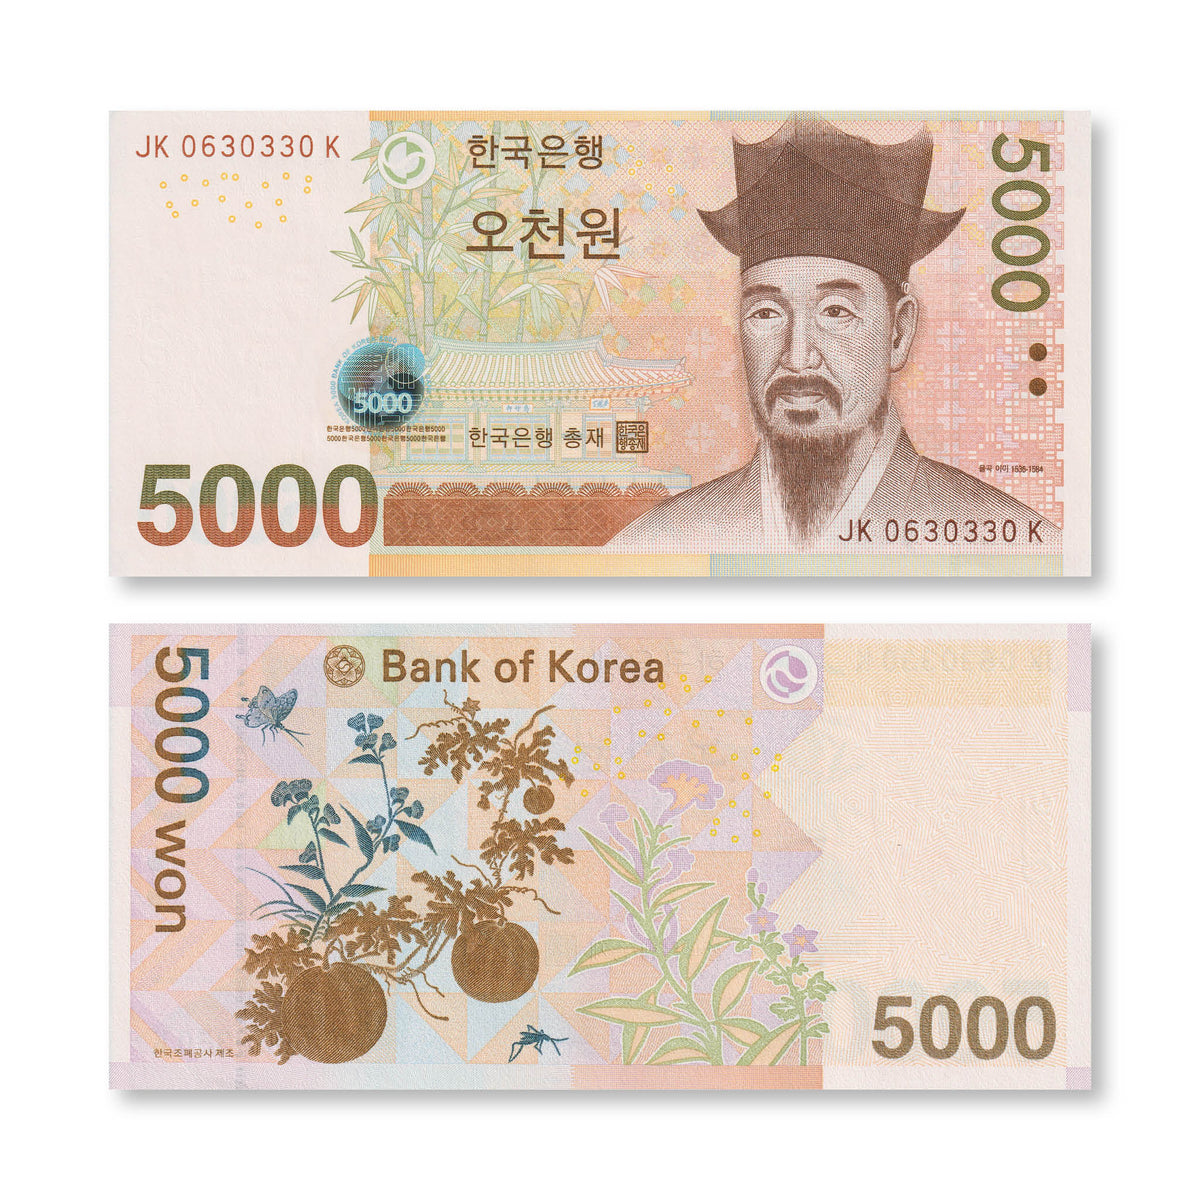 South Korea 5000 Won, 2006, B251a, P55a, UNC - Robert's World Money - World Banknotes